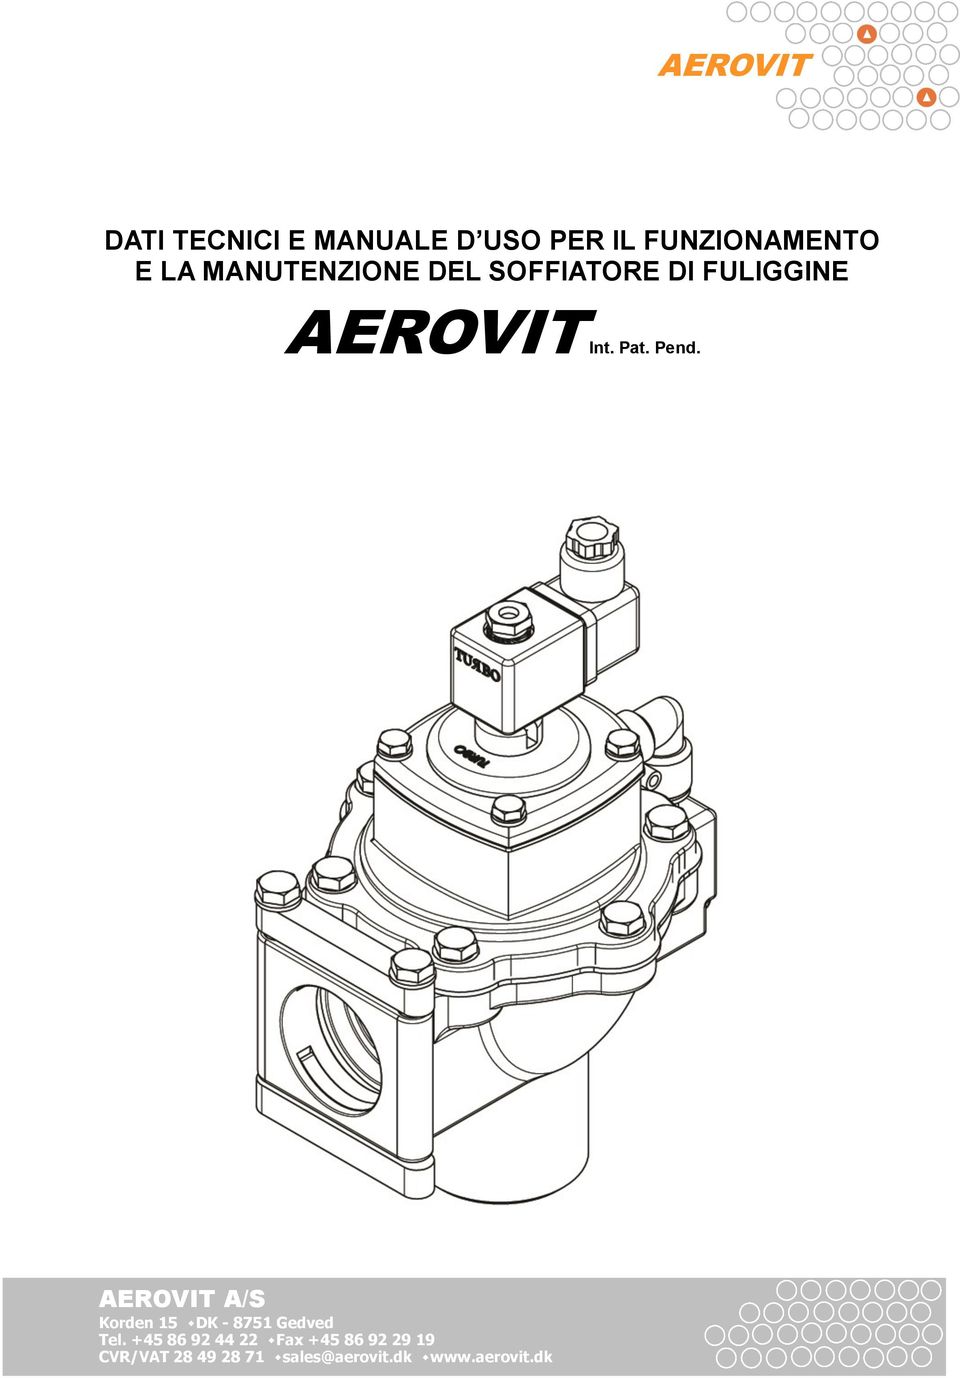 AEROVIT A/S Korden 15 ٠DK - 8751 Gedved Tel.